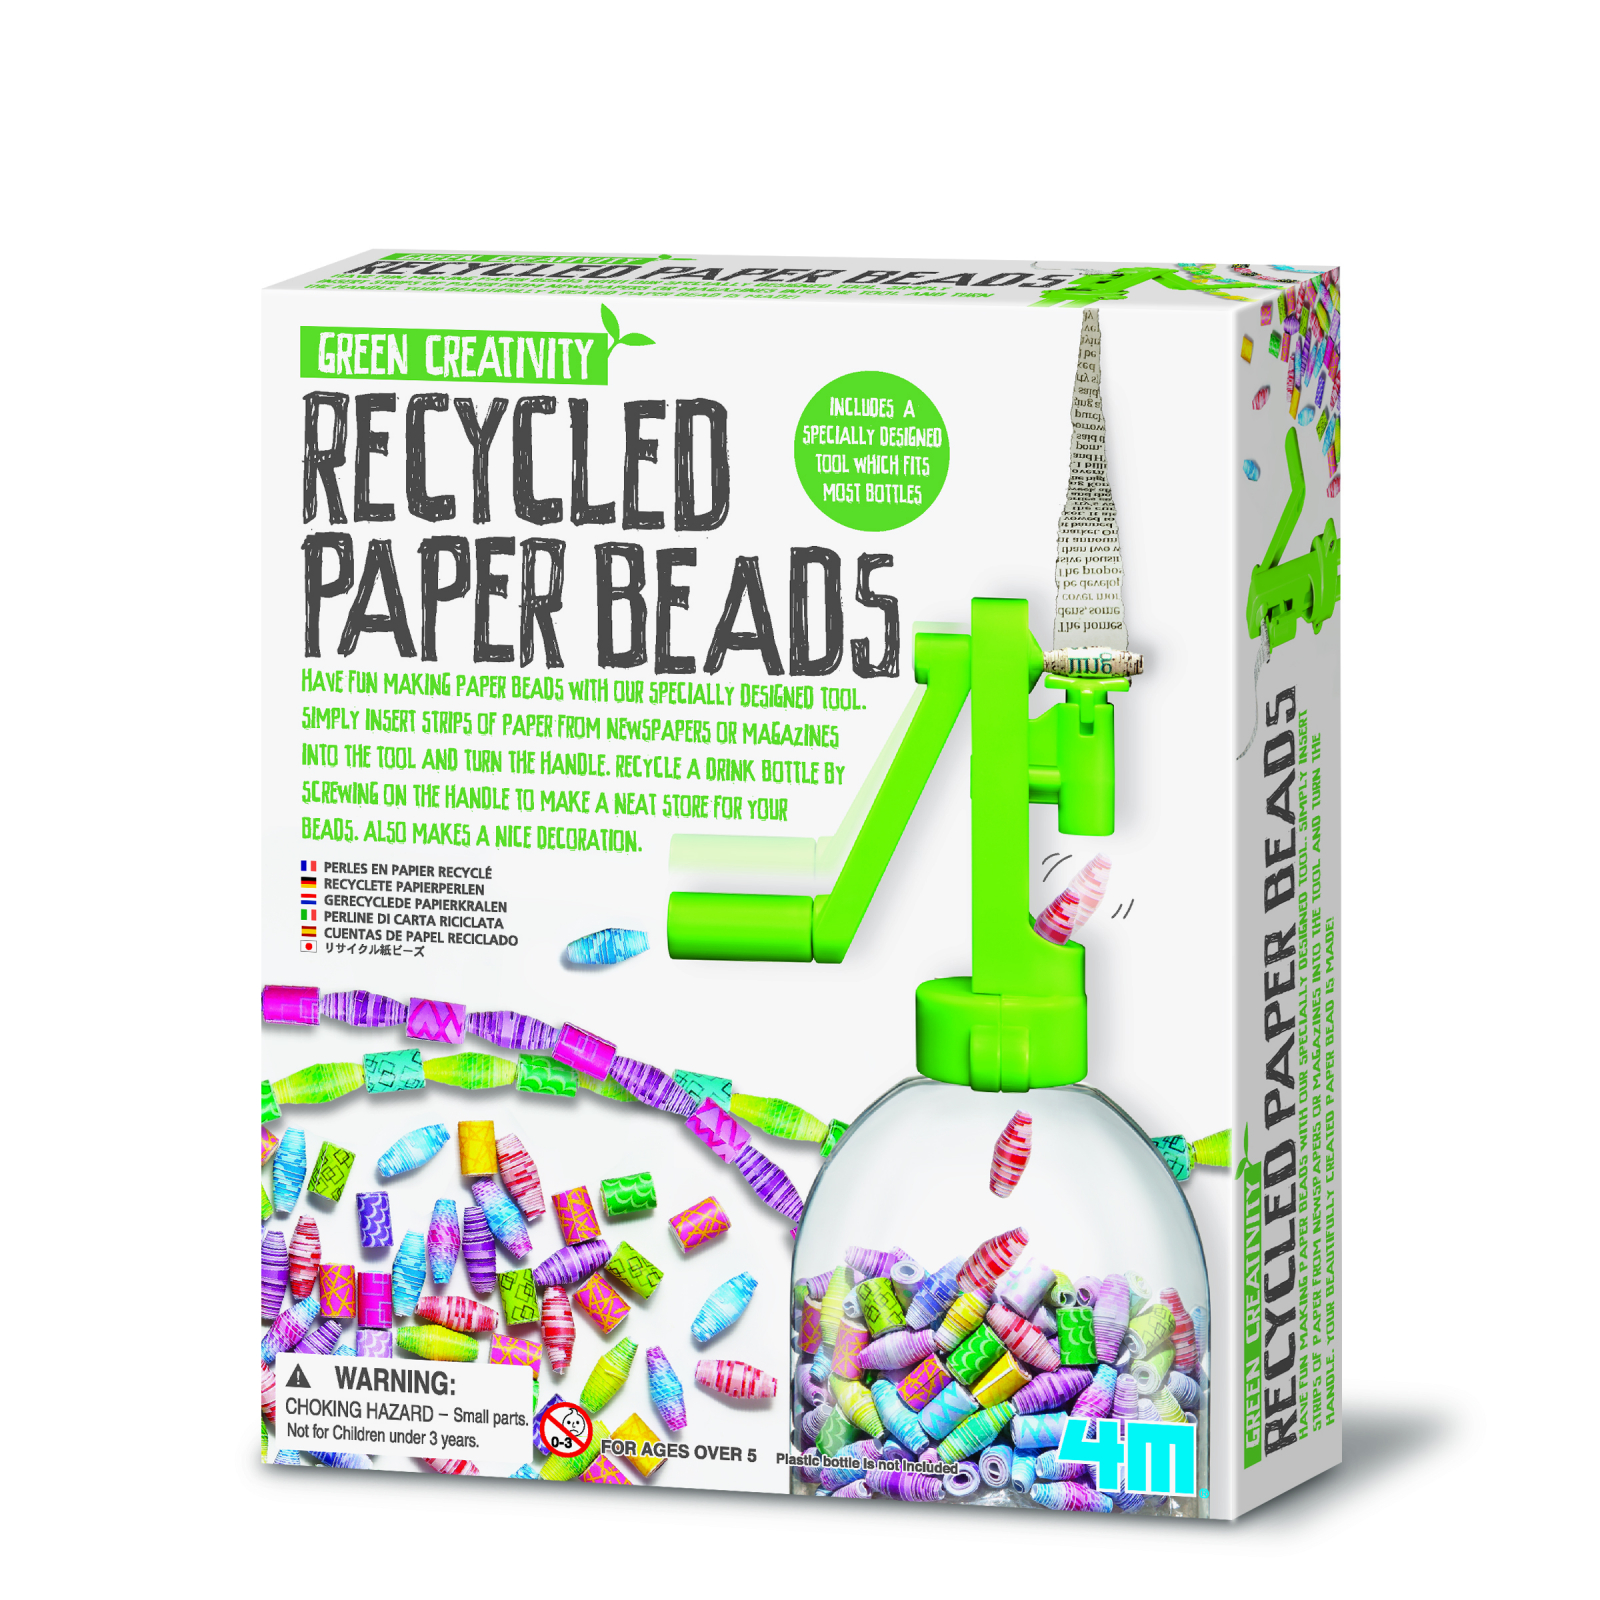 Kit creativ - margele din hartie reciclata, green creativity image6